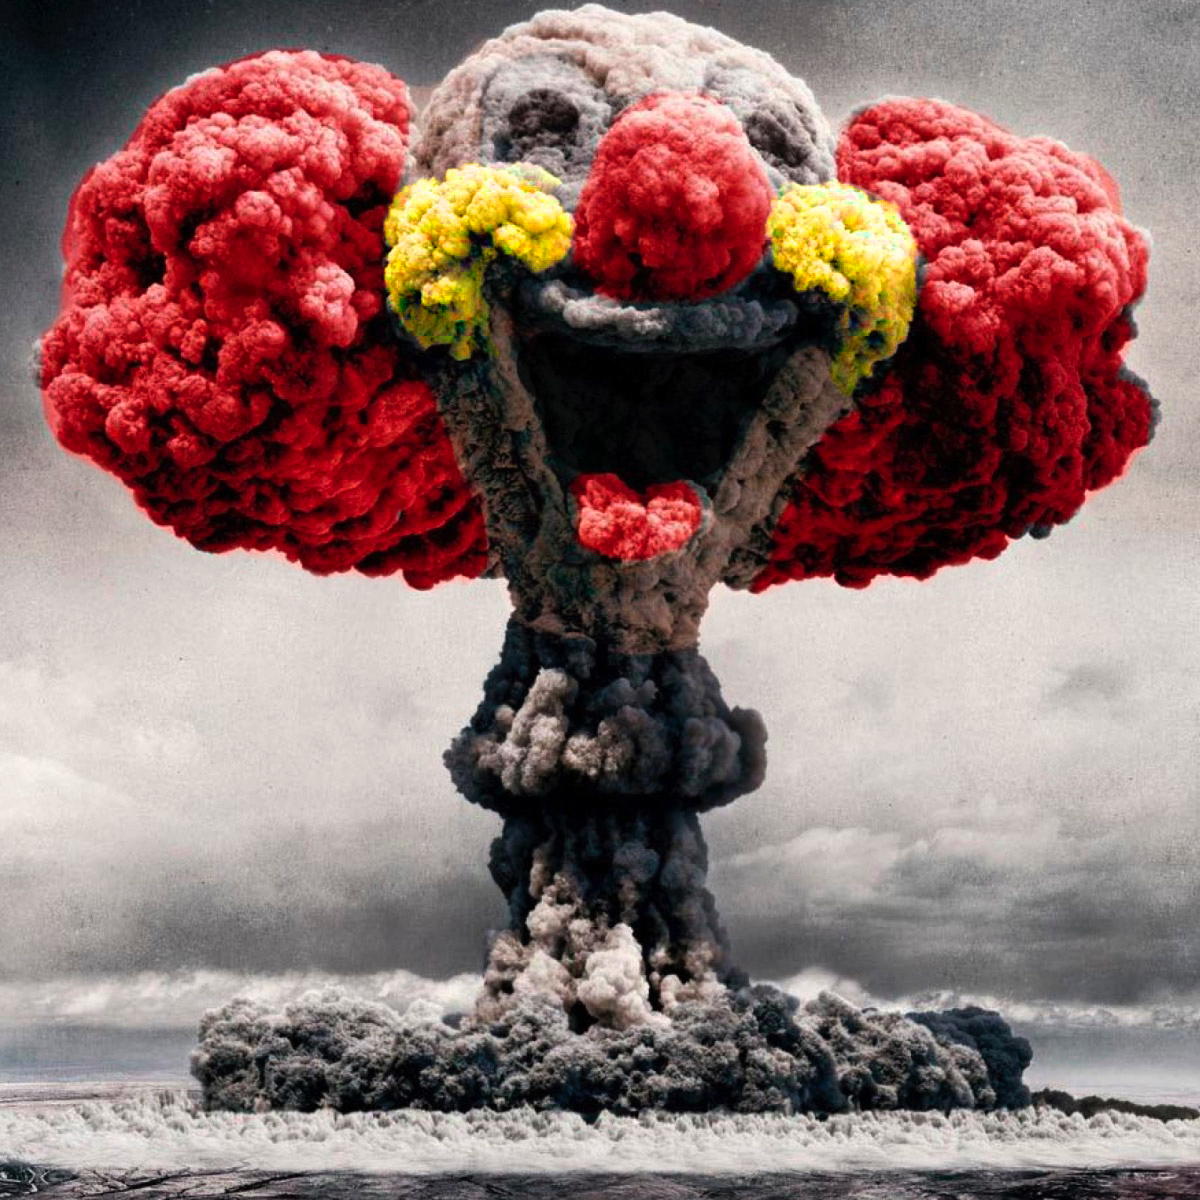 Atombombe atompilz clown lustige zerstoerung vernichtung wahnsinn deutsche atombombe israel atombombenbauer